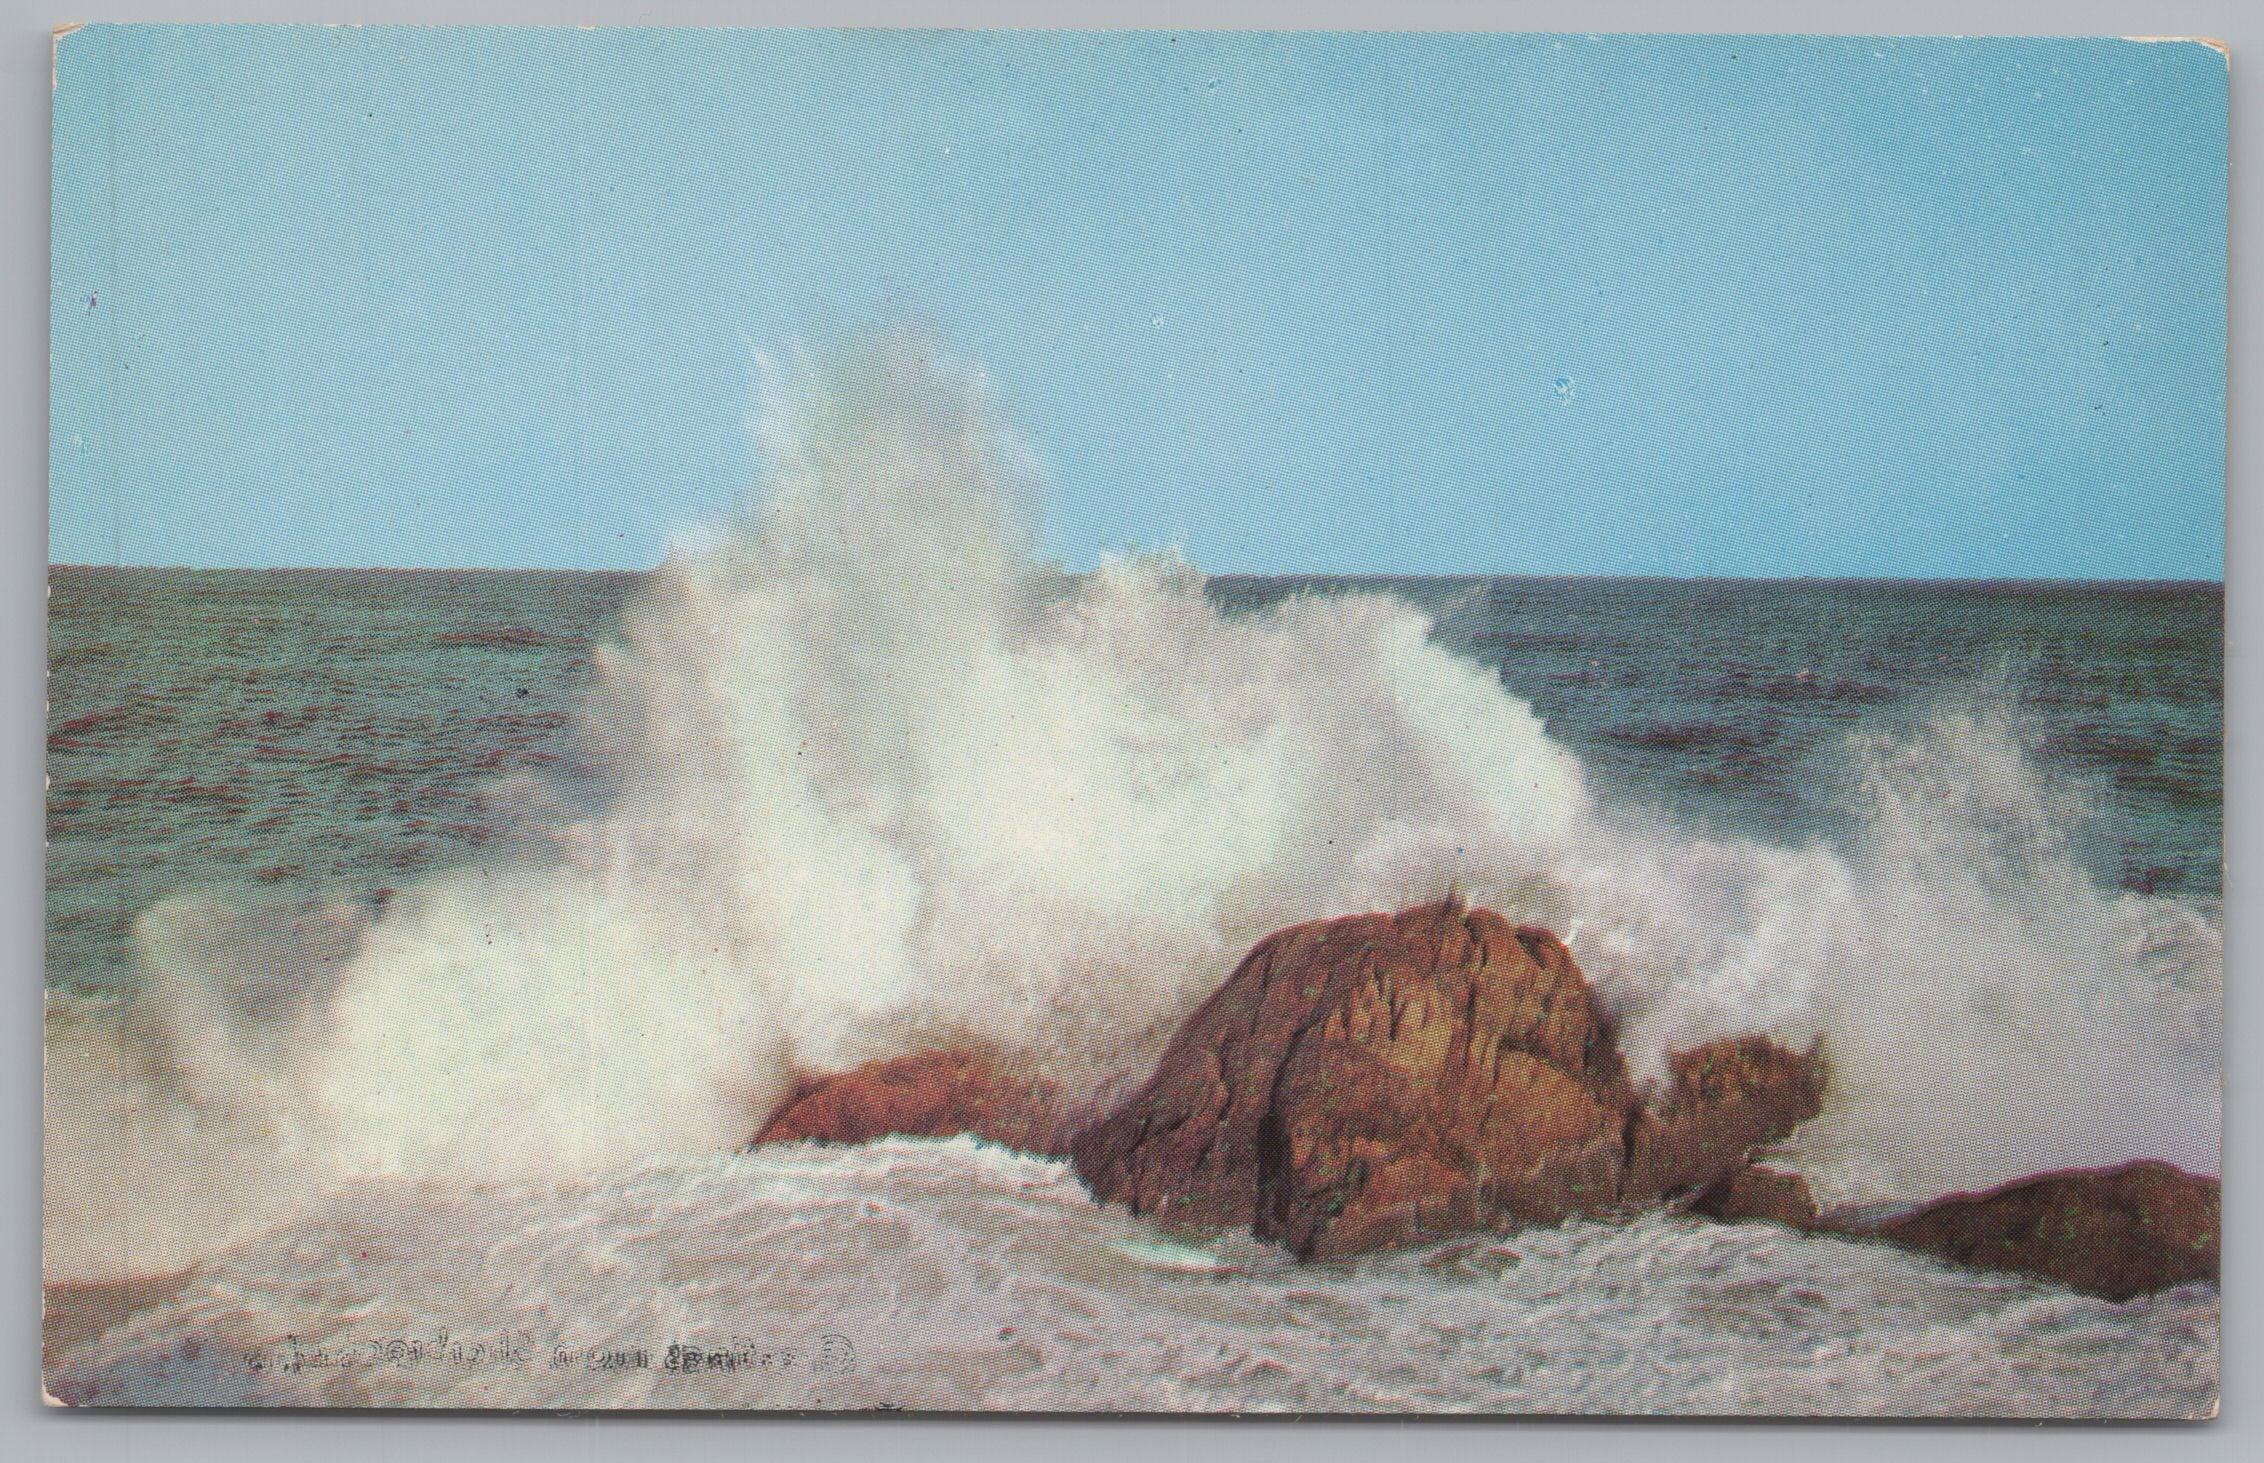 Rocks And Surf, Vintage Post Card.